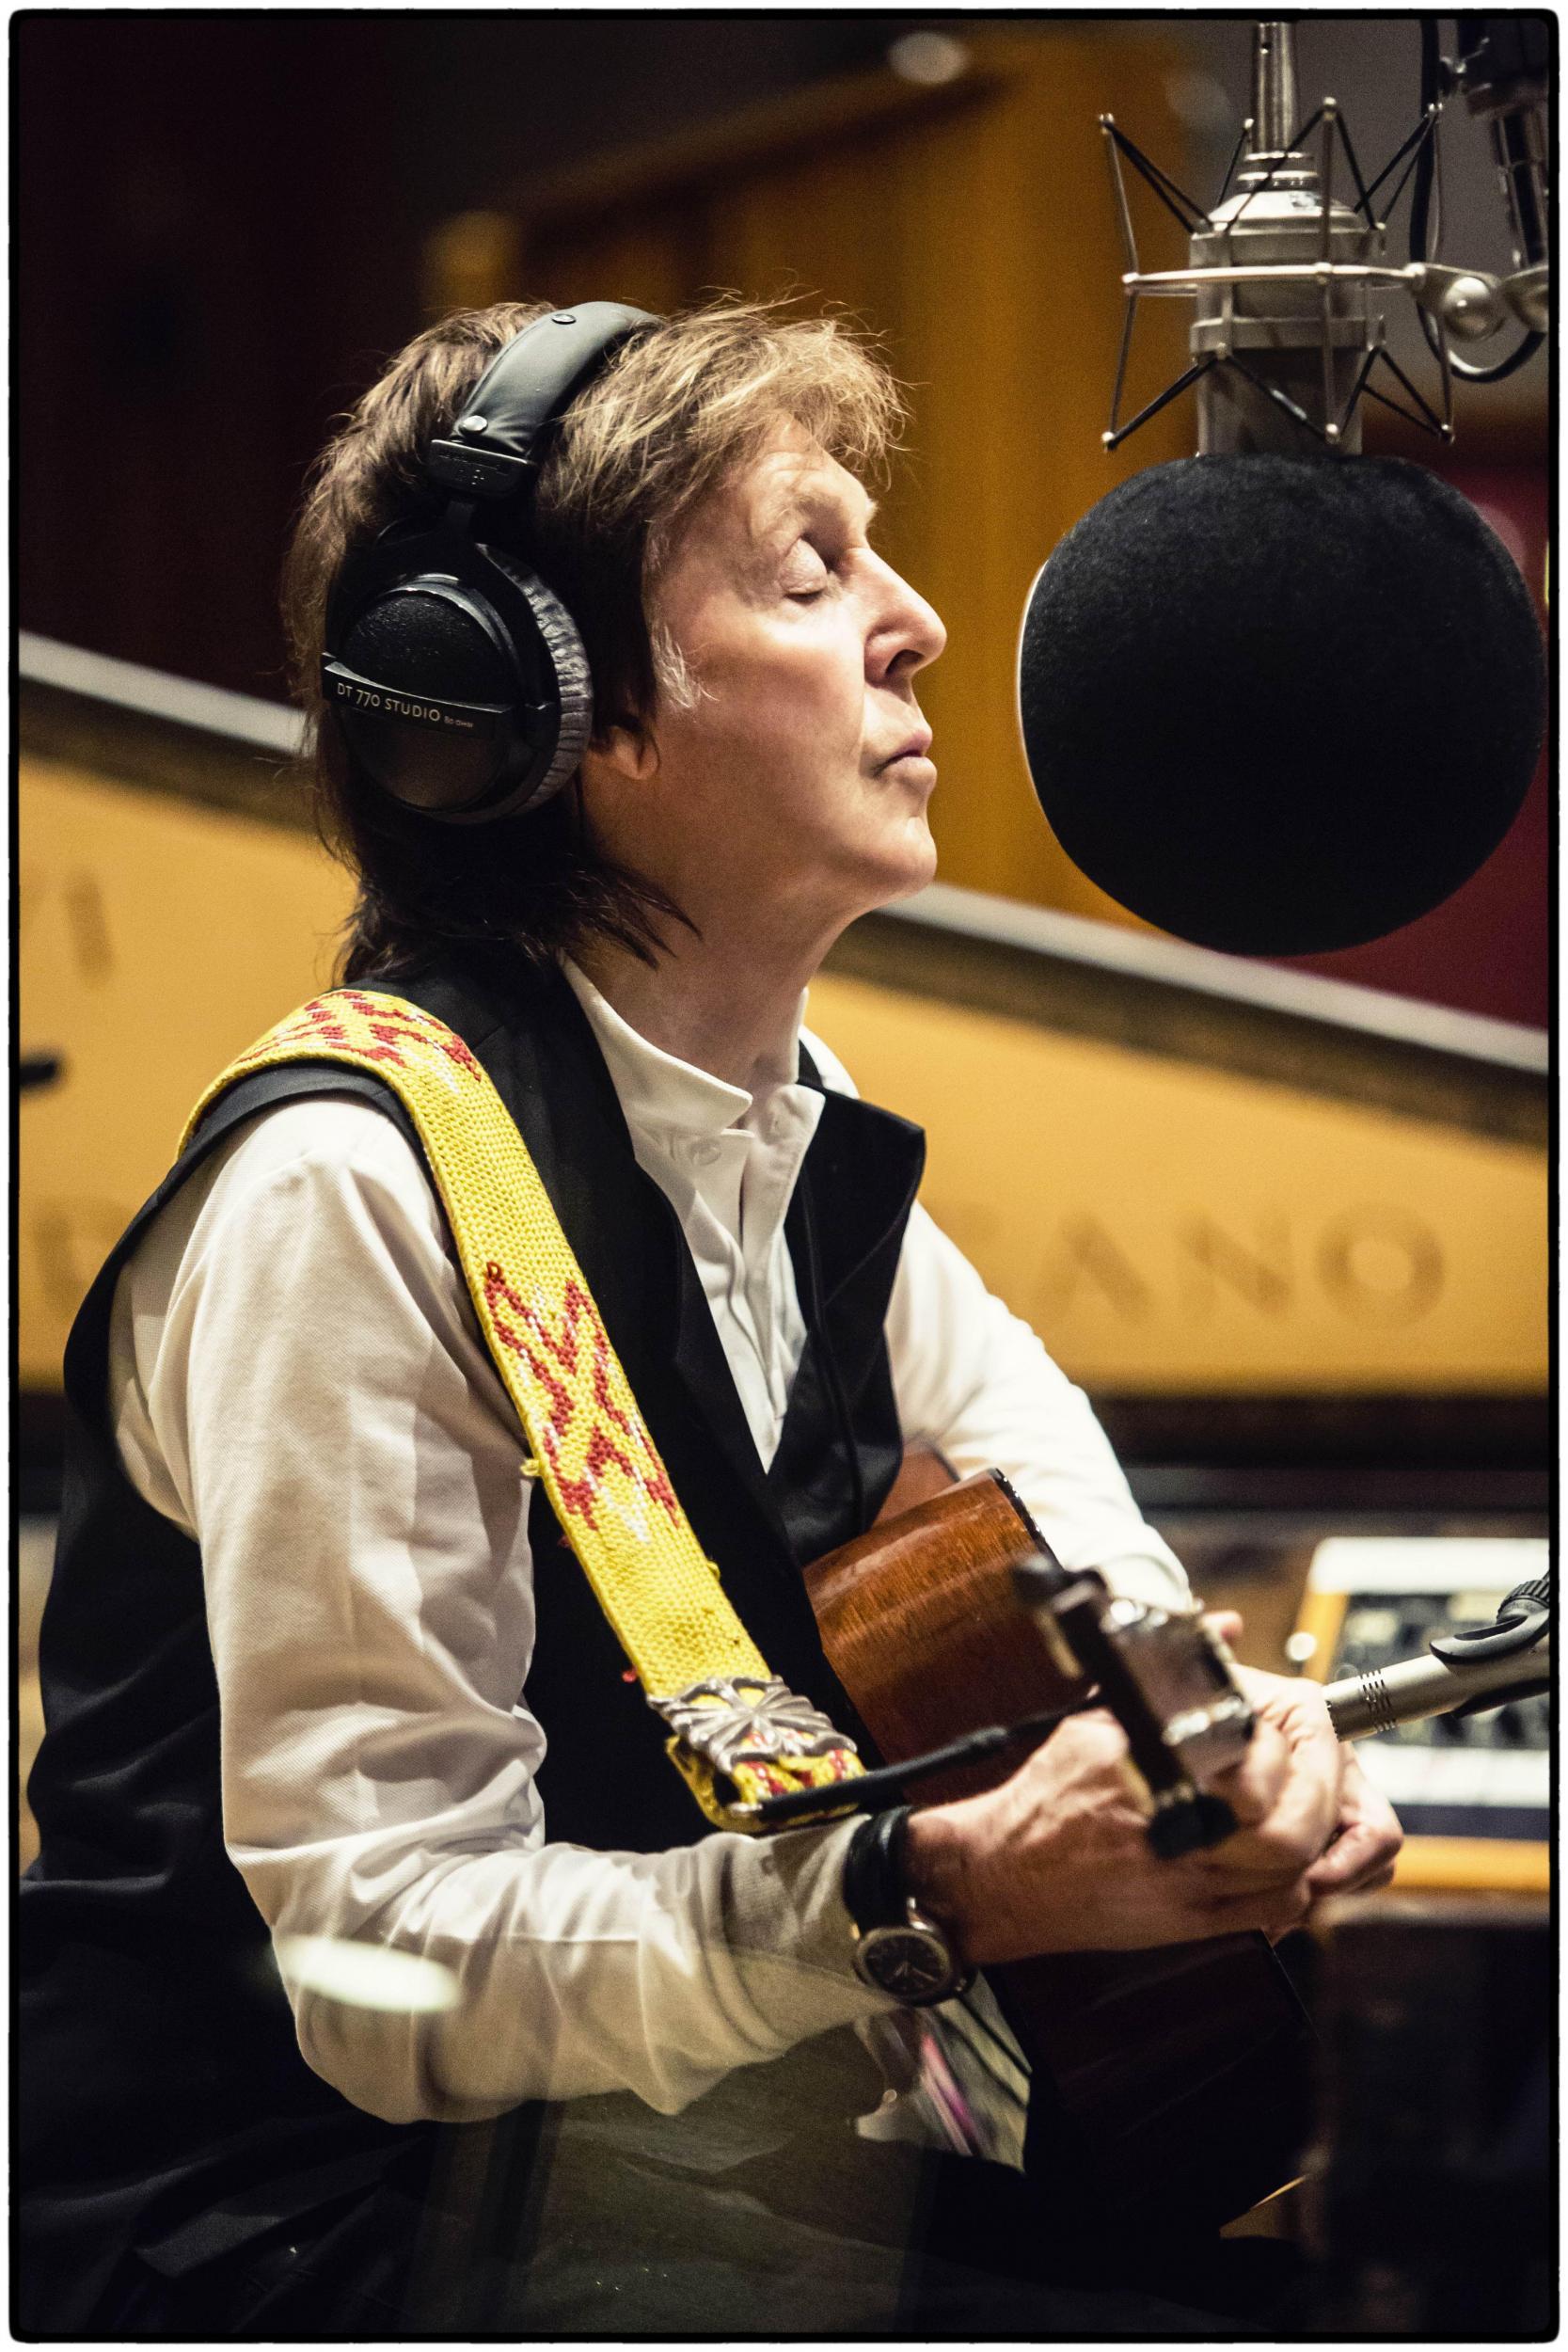 In the studio: Paul McCartney recording his 17th solo album 'Egypt Station'